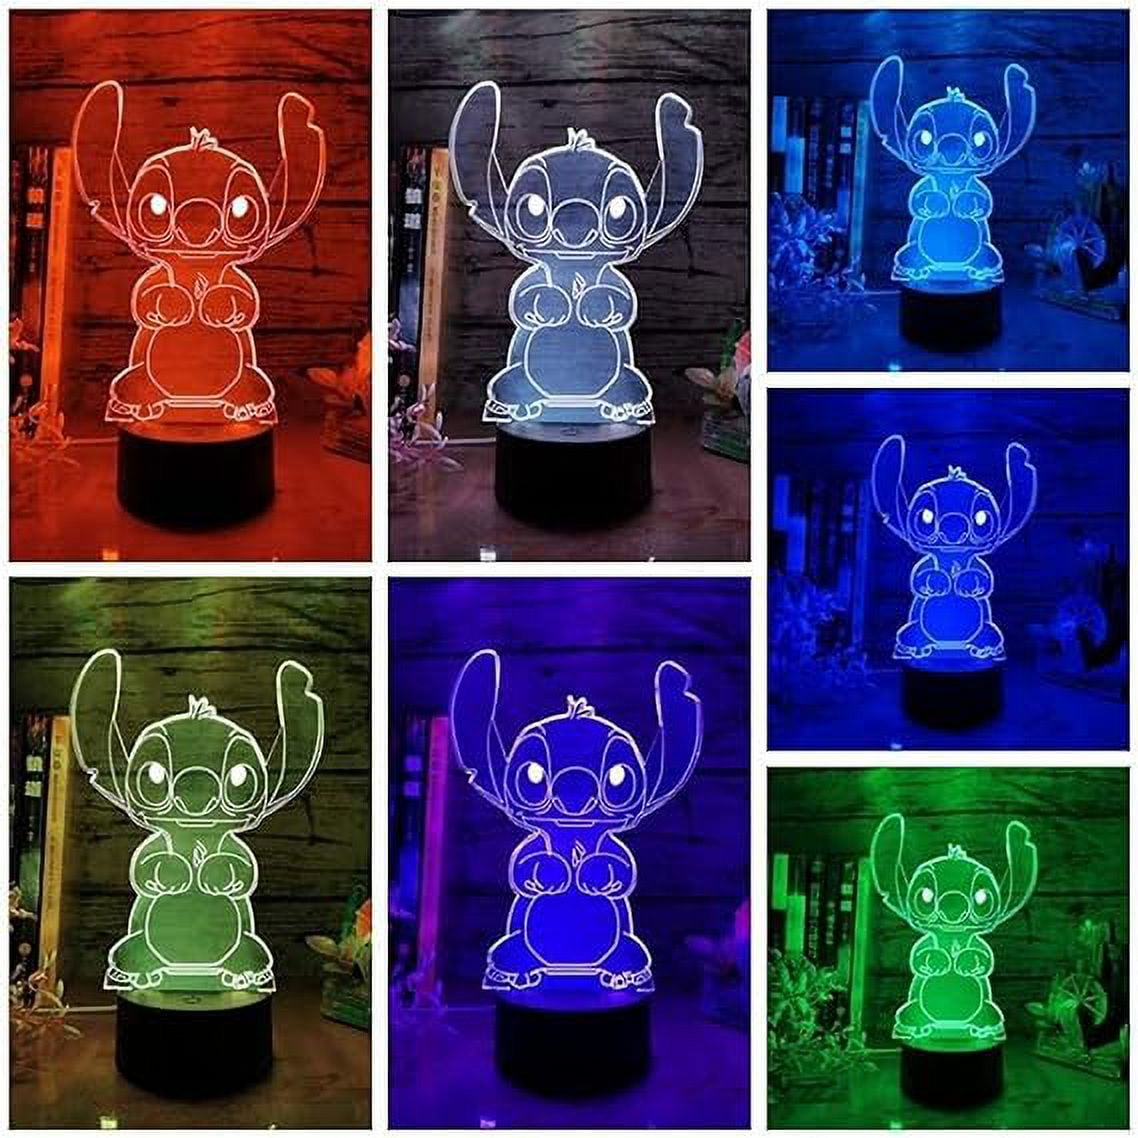 Disney Lilo Stitch 3D LED Night Light Color Changing Visual